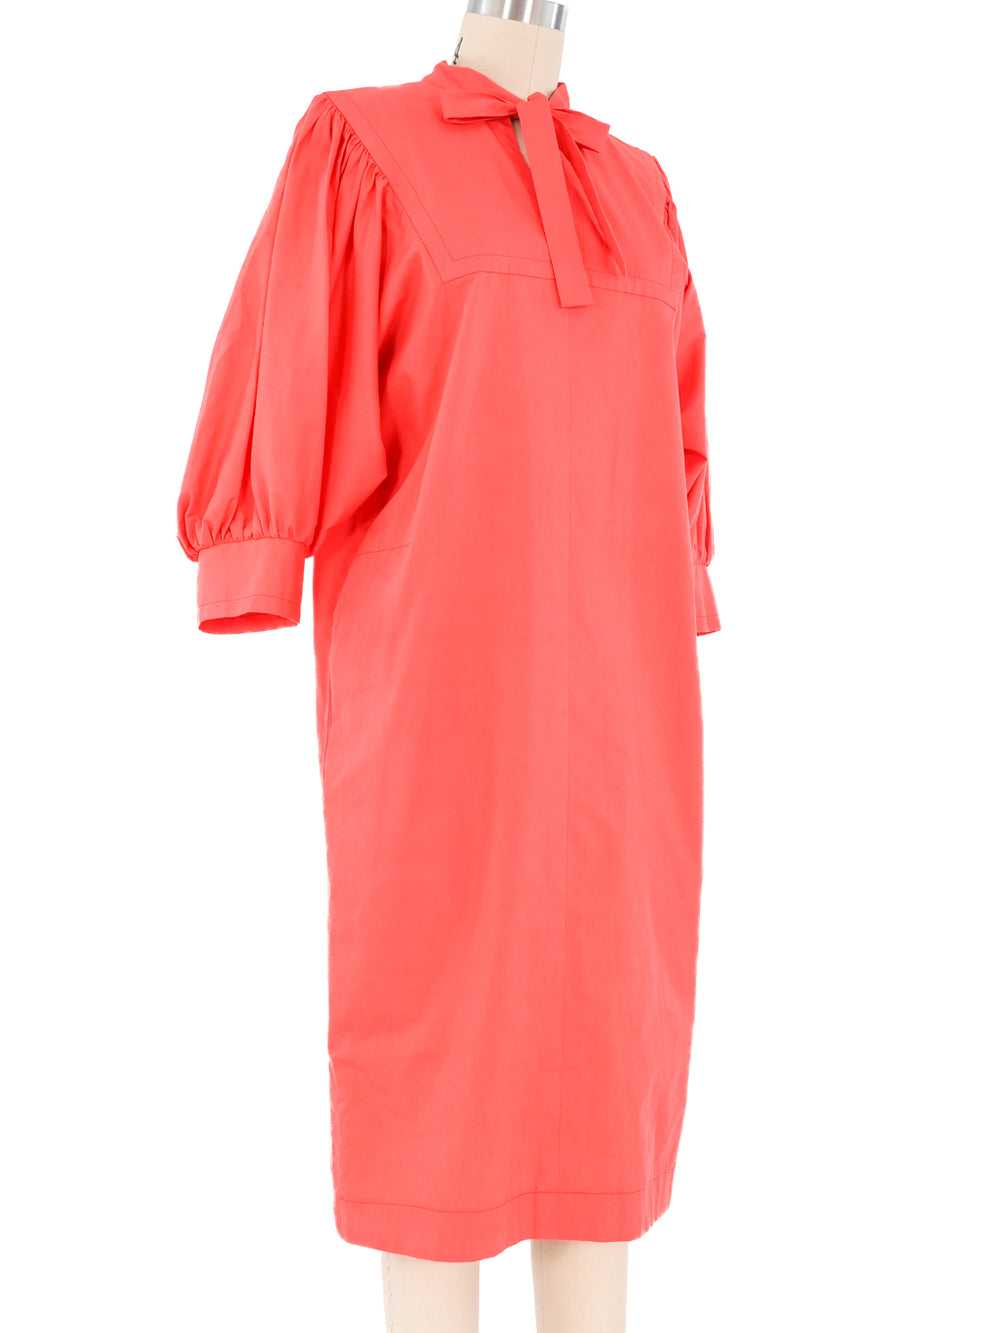 Yves Saint Laurent Coral Puff Sleeve Dress - image 3